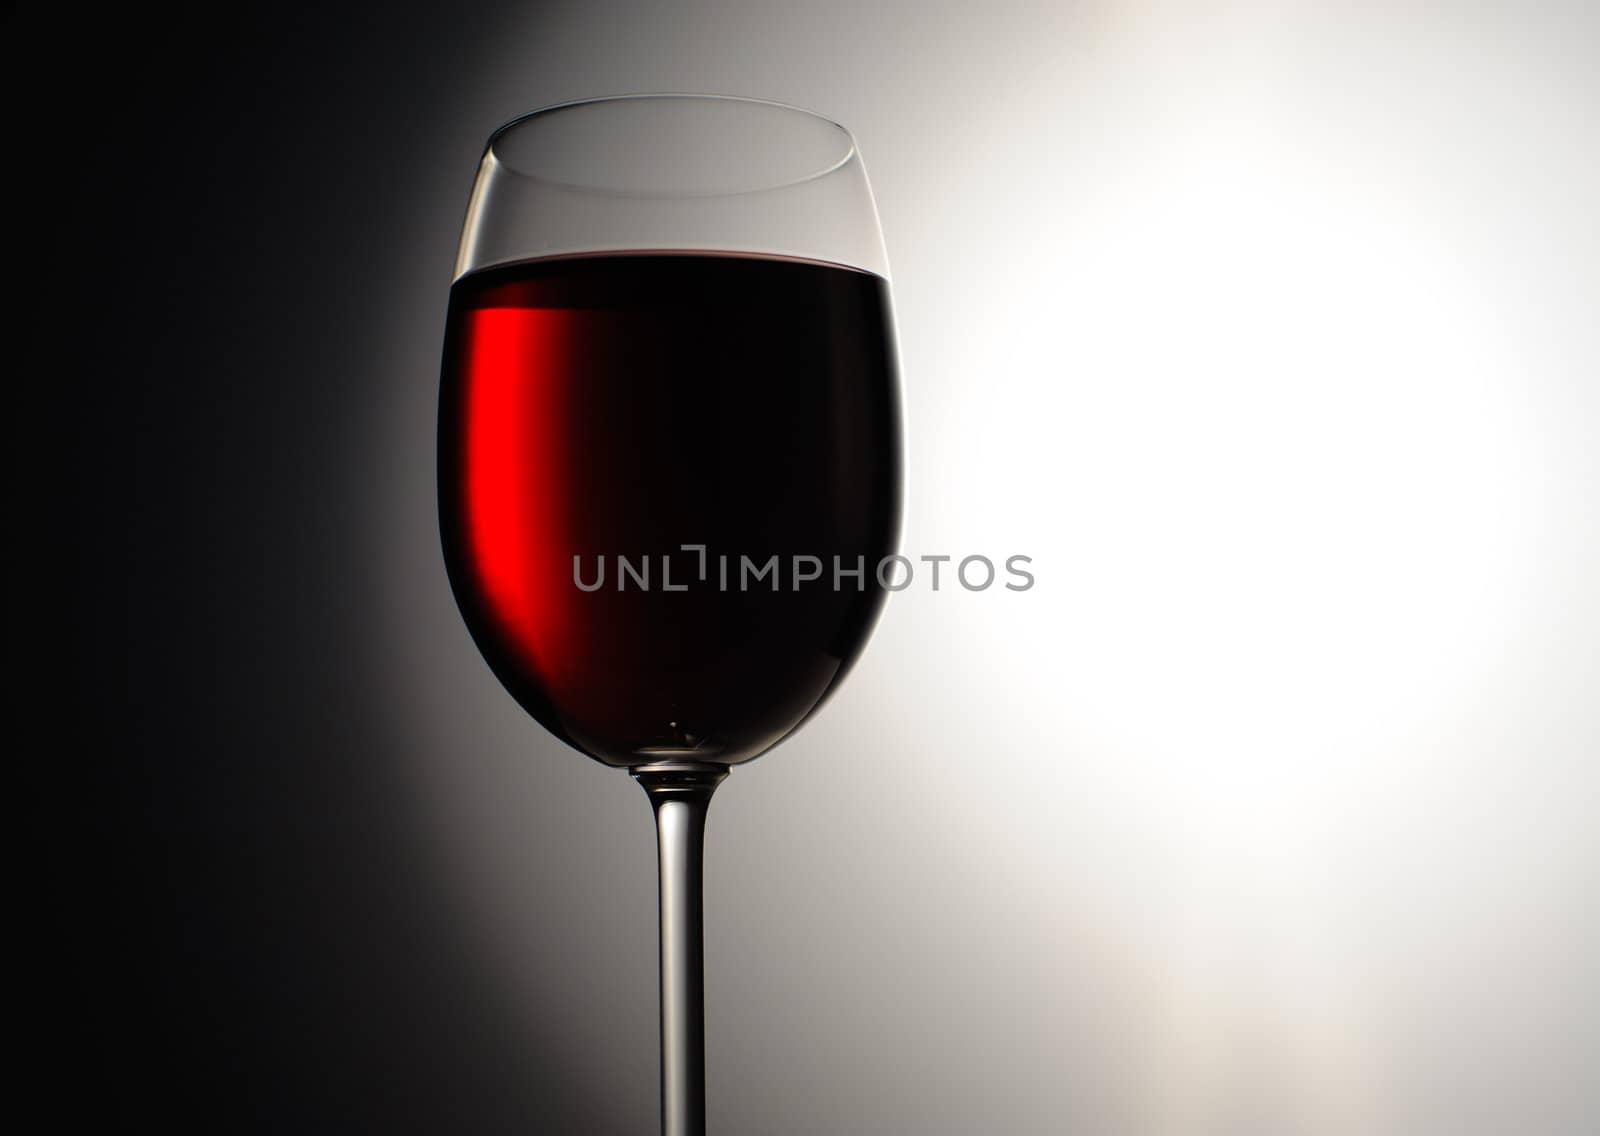 Closeup of red wine wineglass on dark background